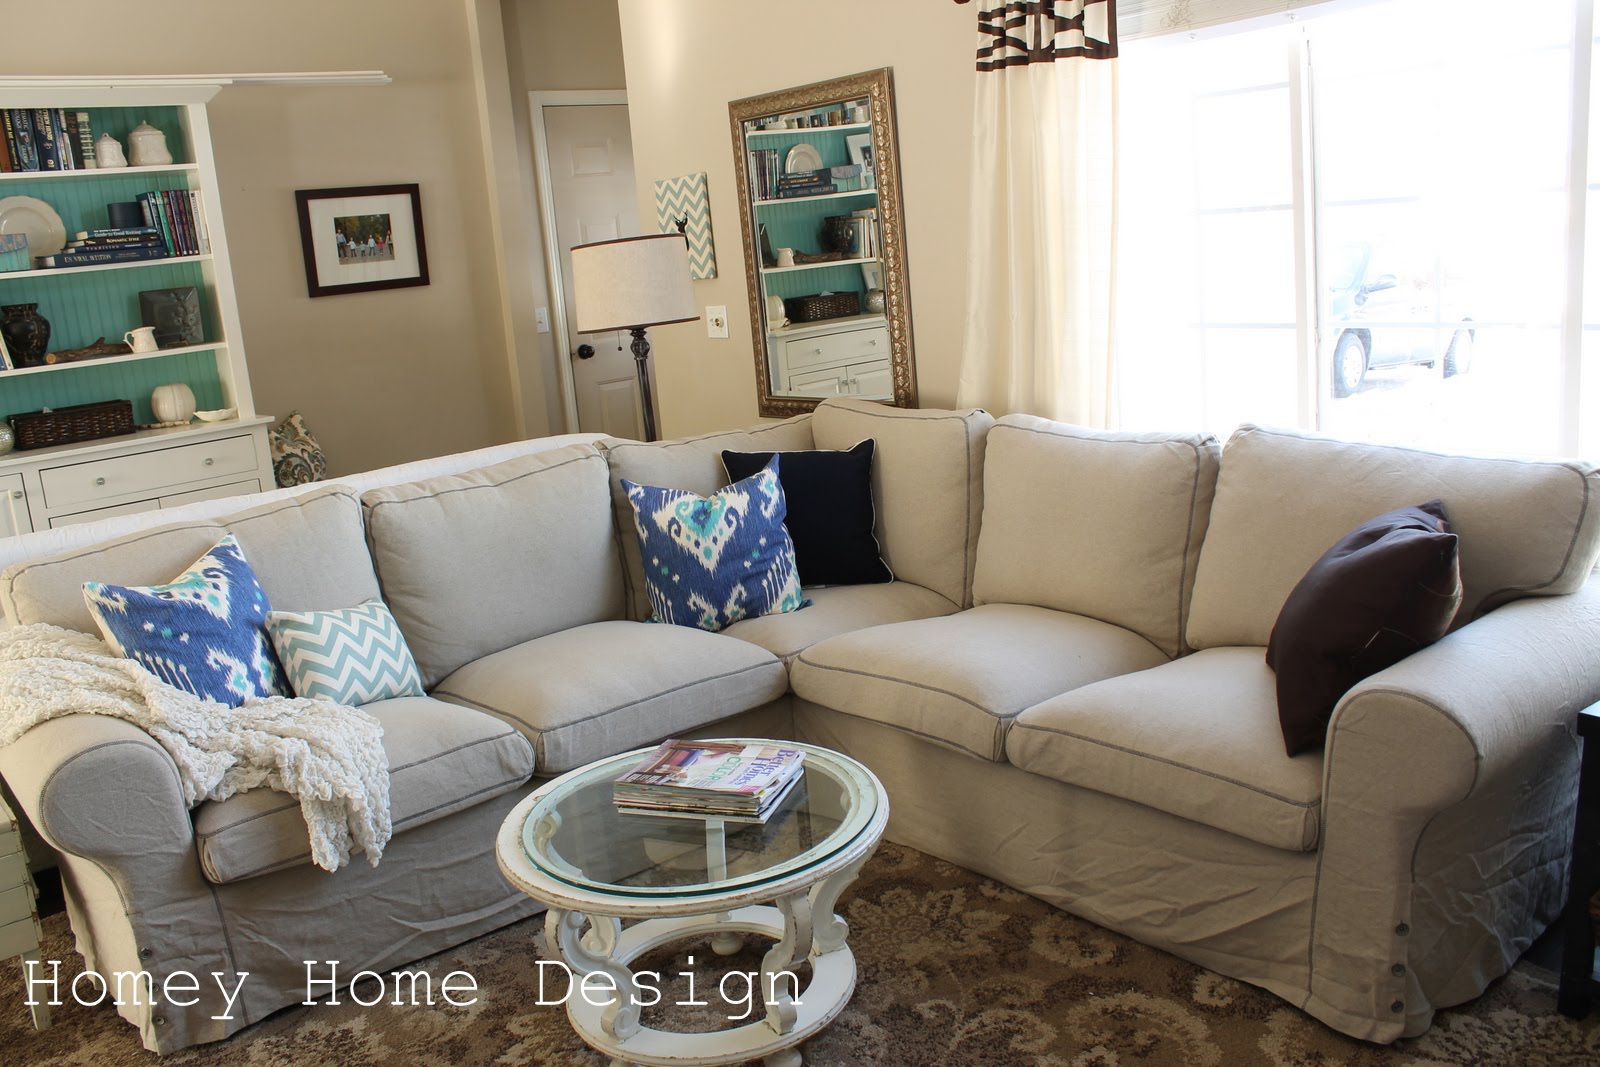 Homey Home Design The Couch Saga